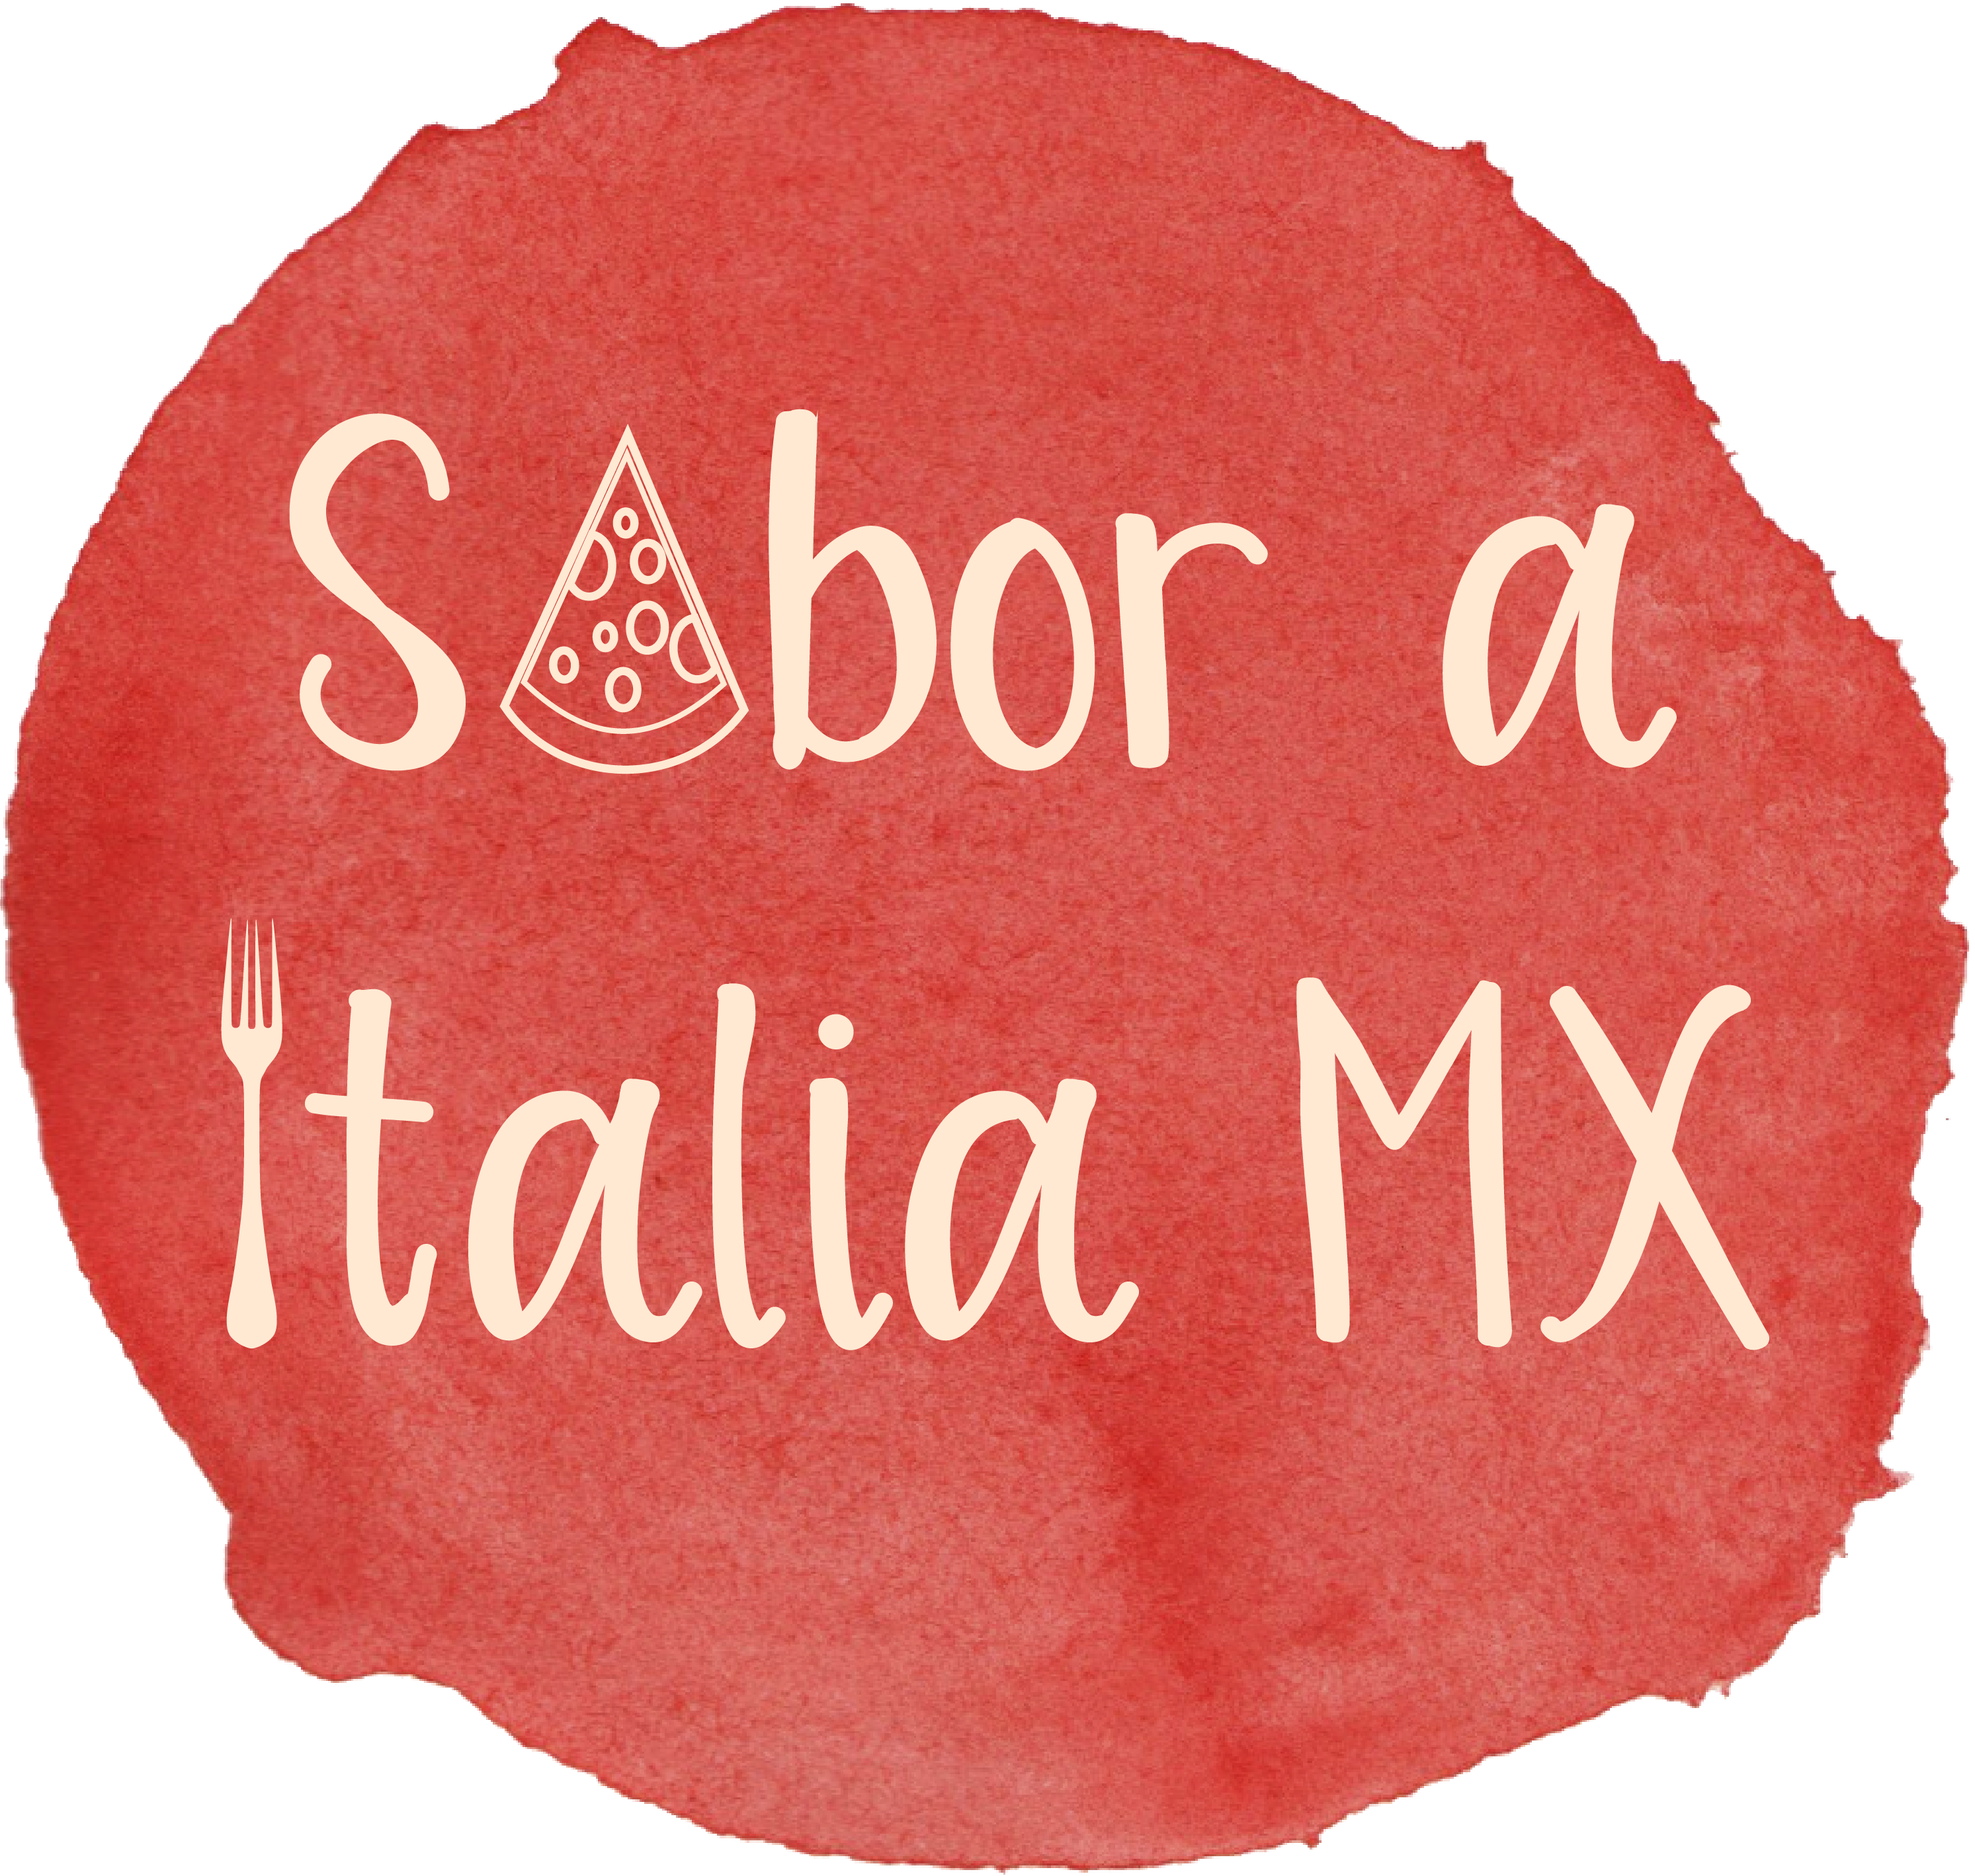 La importancia del Made in Italy - Sabor a Italia MX